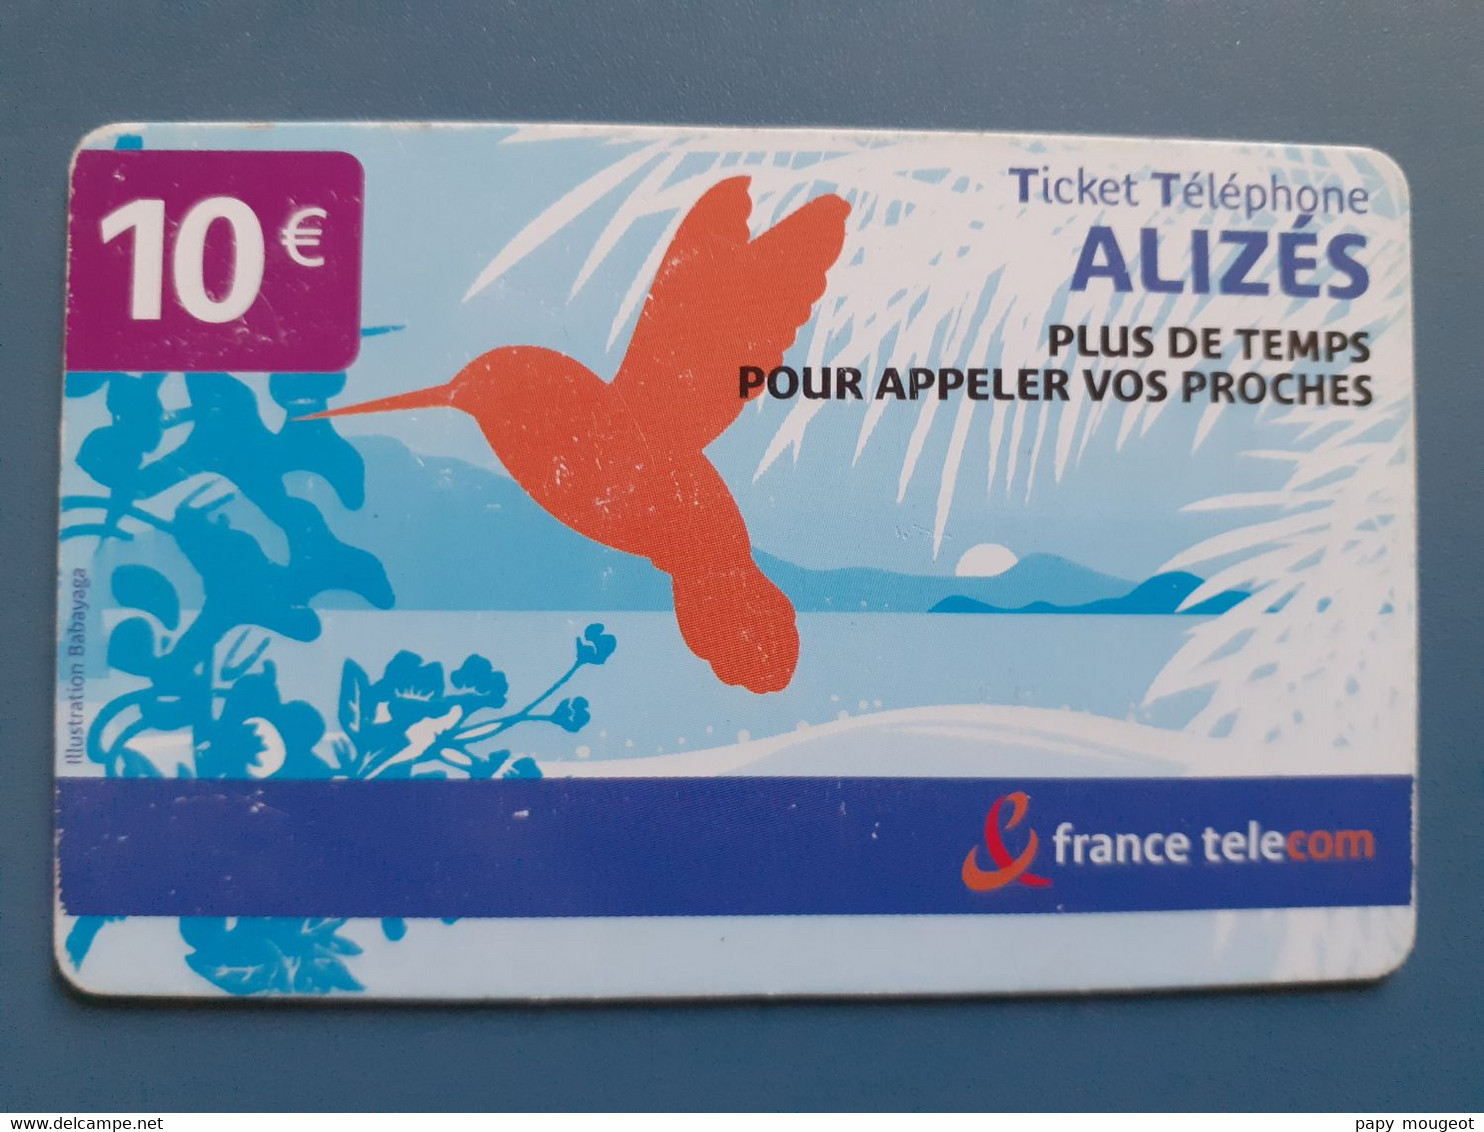 Ticket Téléphone Alizés France Télécom 10€ Validité 31/01/2008 - Série W 58350026346 - FT Tickets